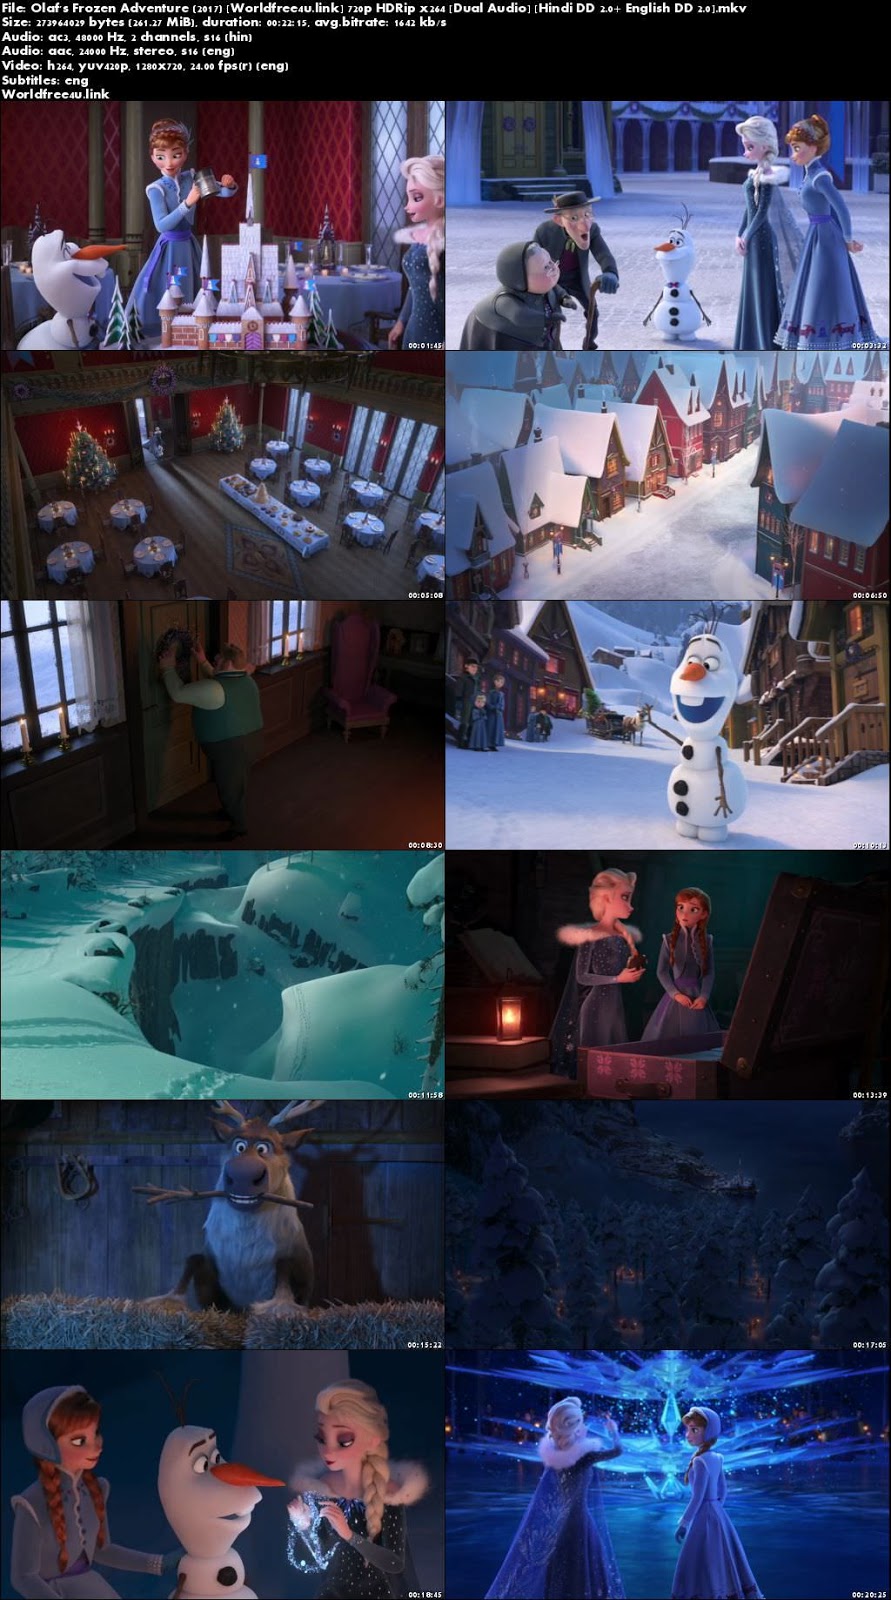 Screen Shoot of Olaf's Frozen Adventure 2017 HDRip 720p Dual Audio Hindi English worldfree4u ,extramovies 